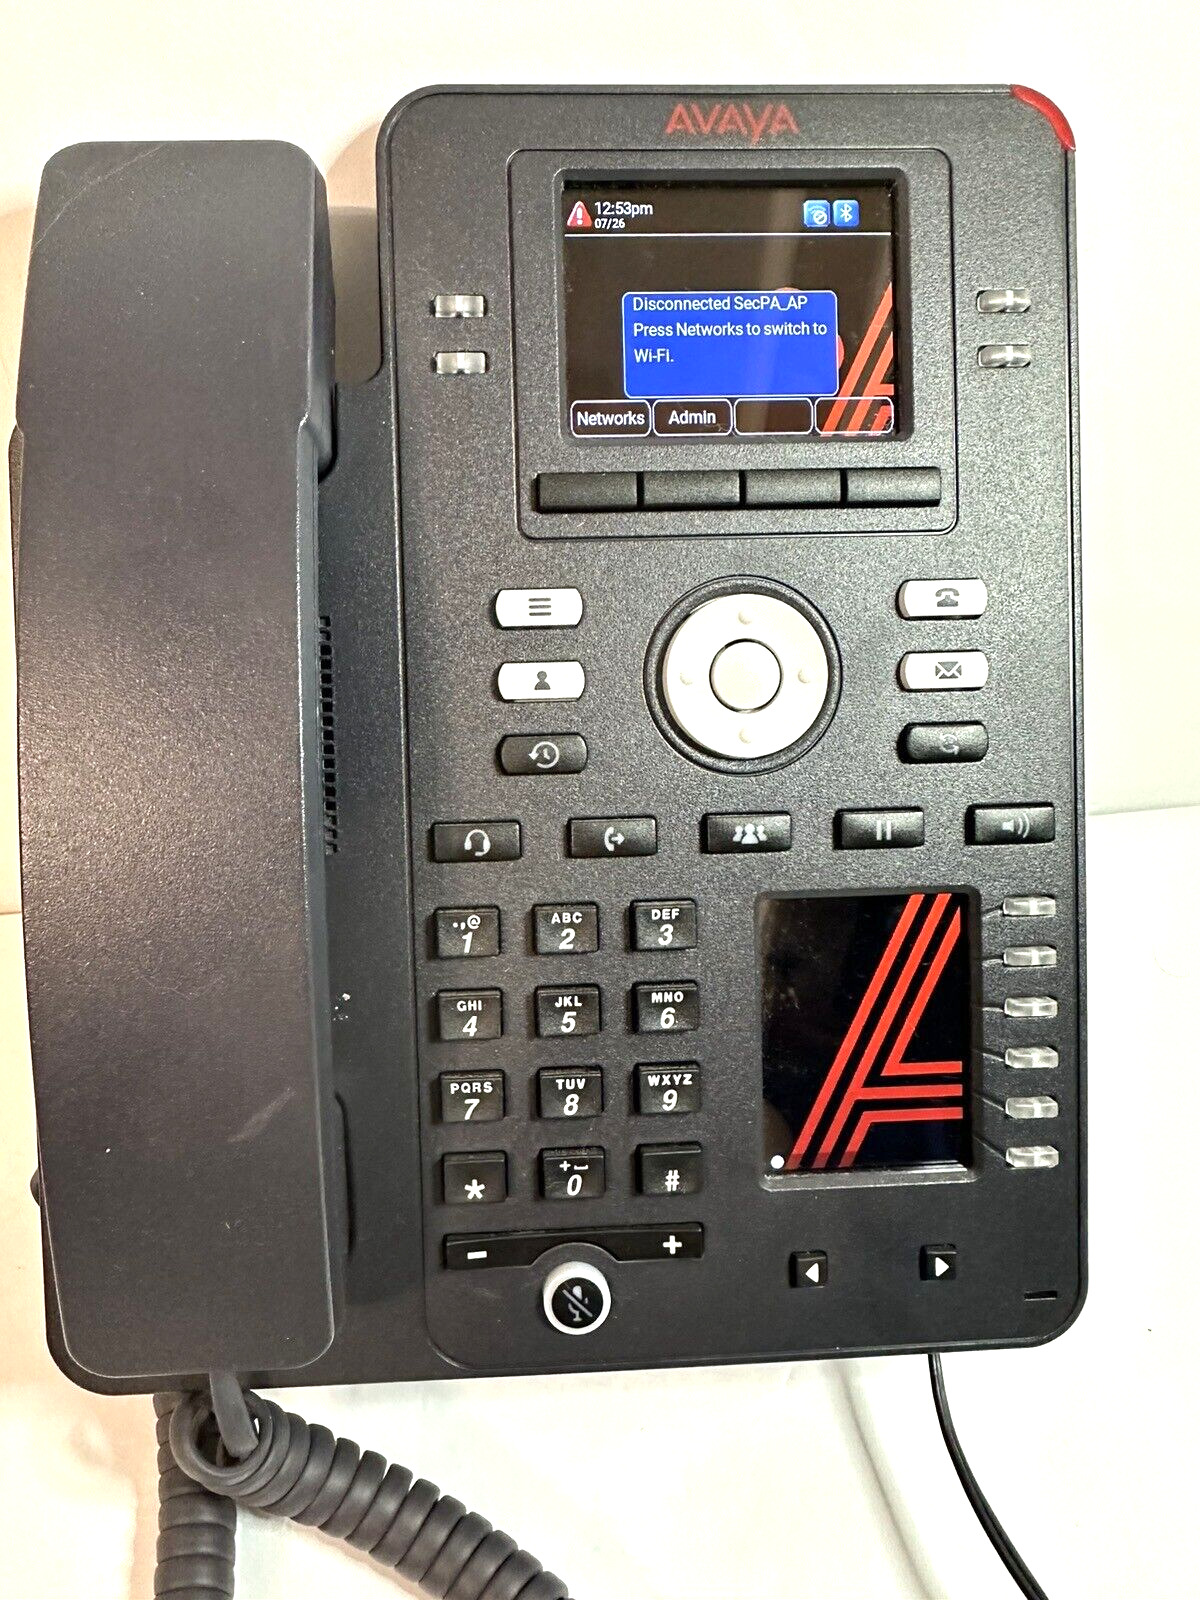 Avaya Phone J15906 6-Line IP Phone #700512394 (no power cord) tested Work Office